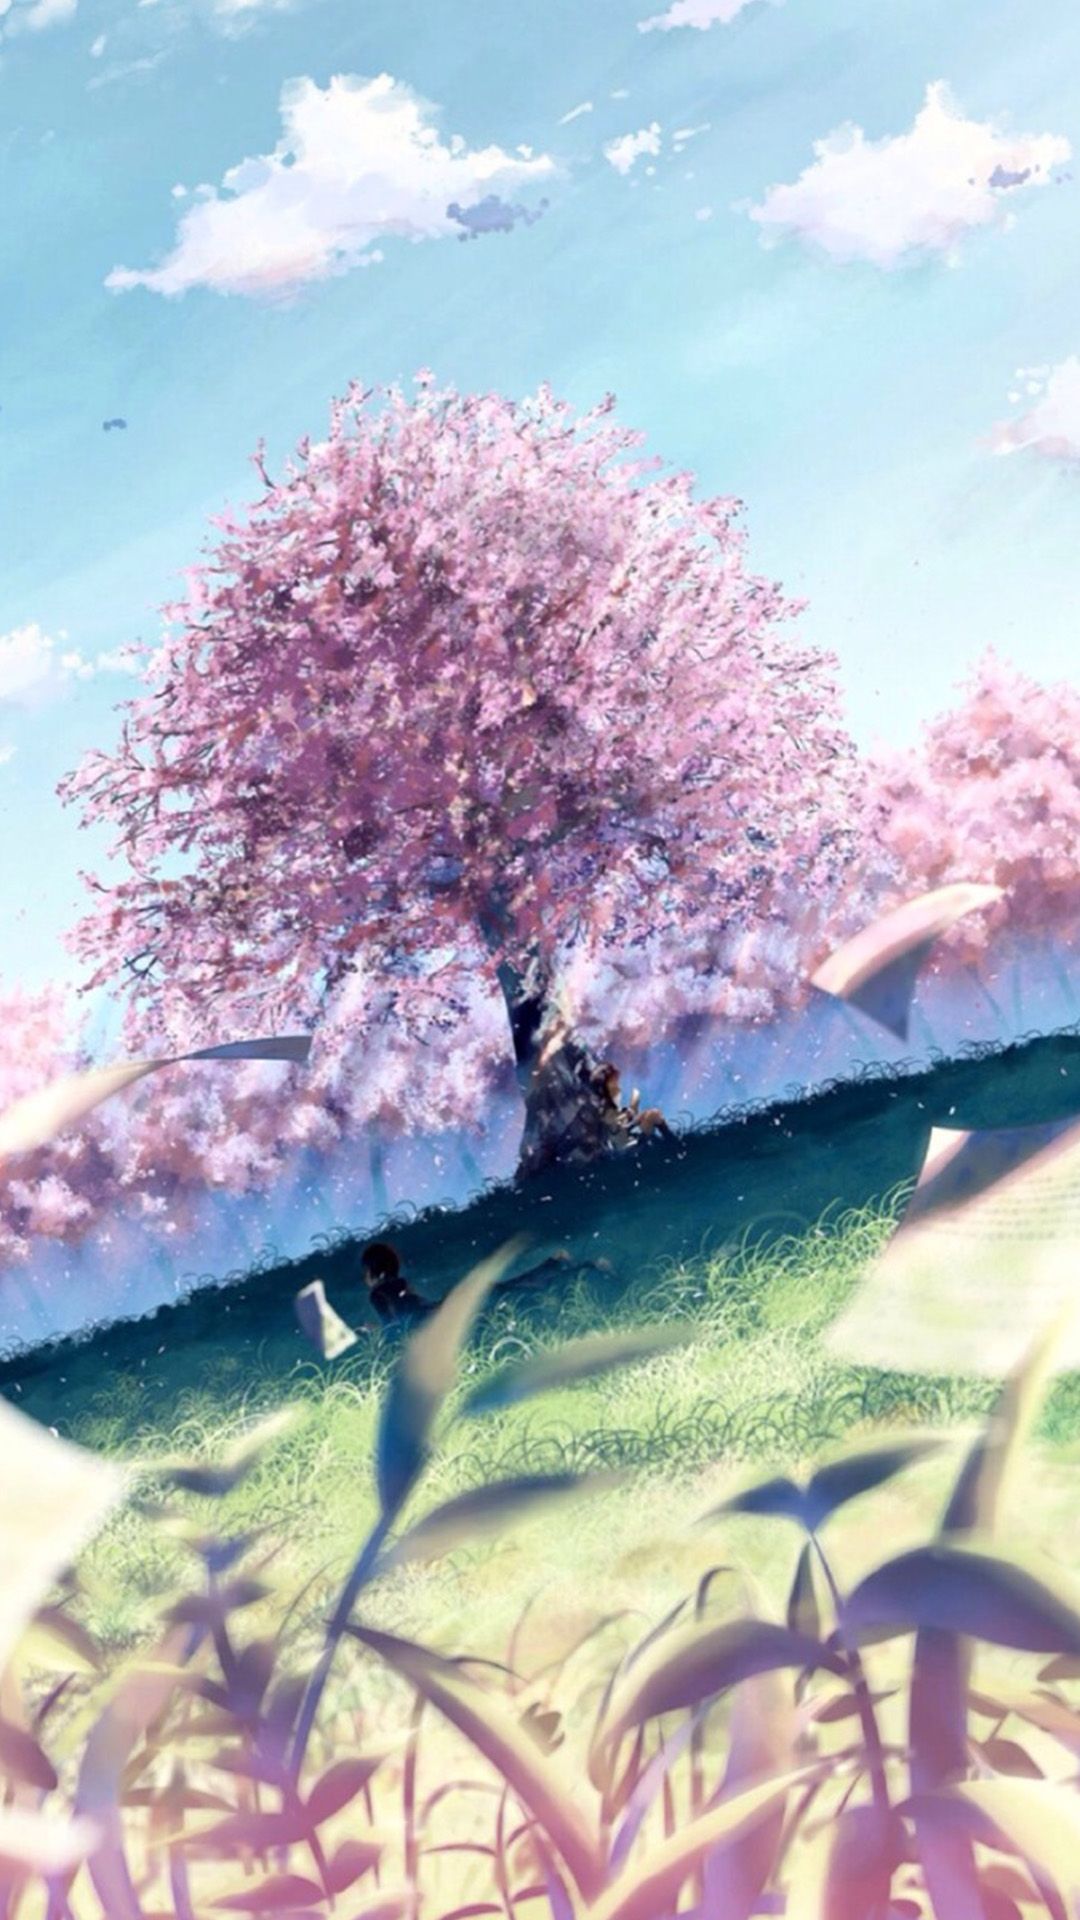 Hayao Miyazaki Mobile Wallpaper